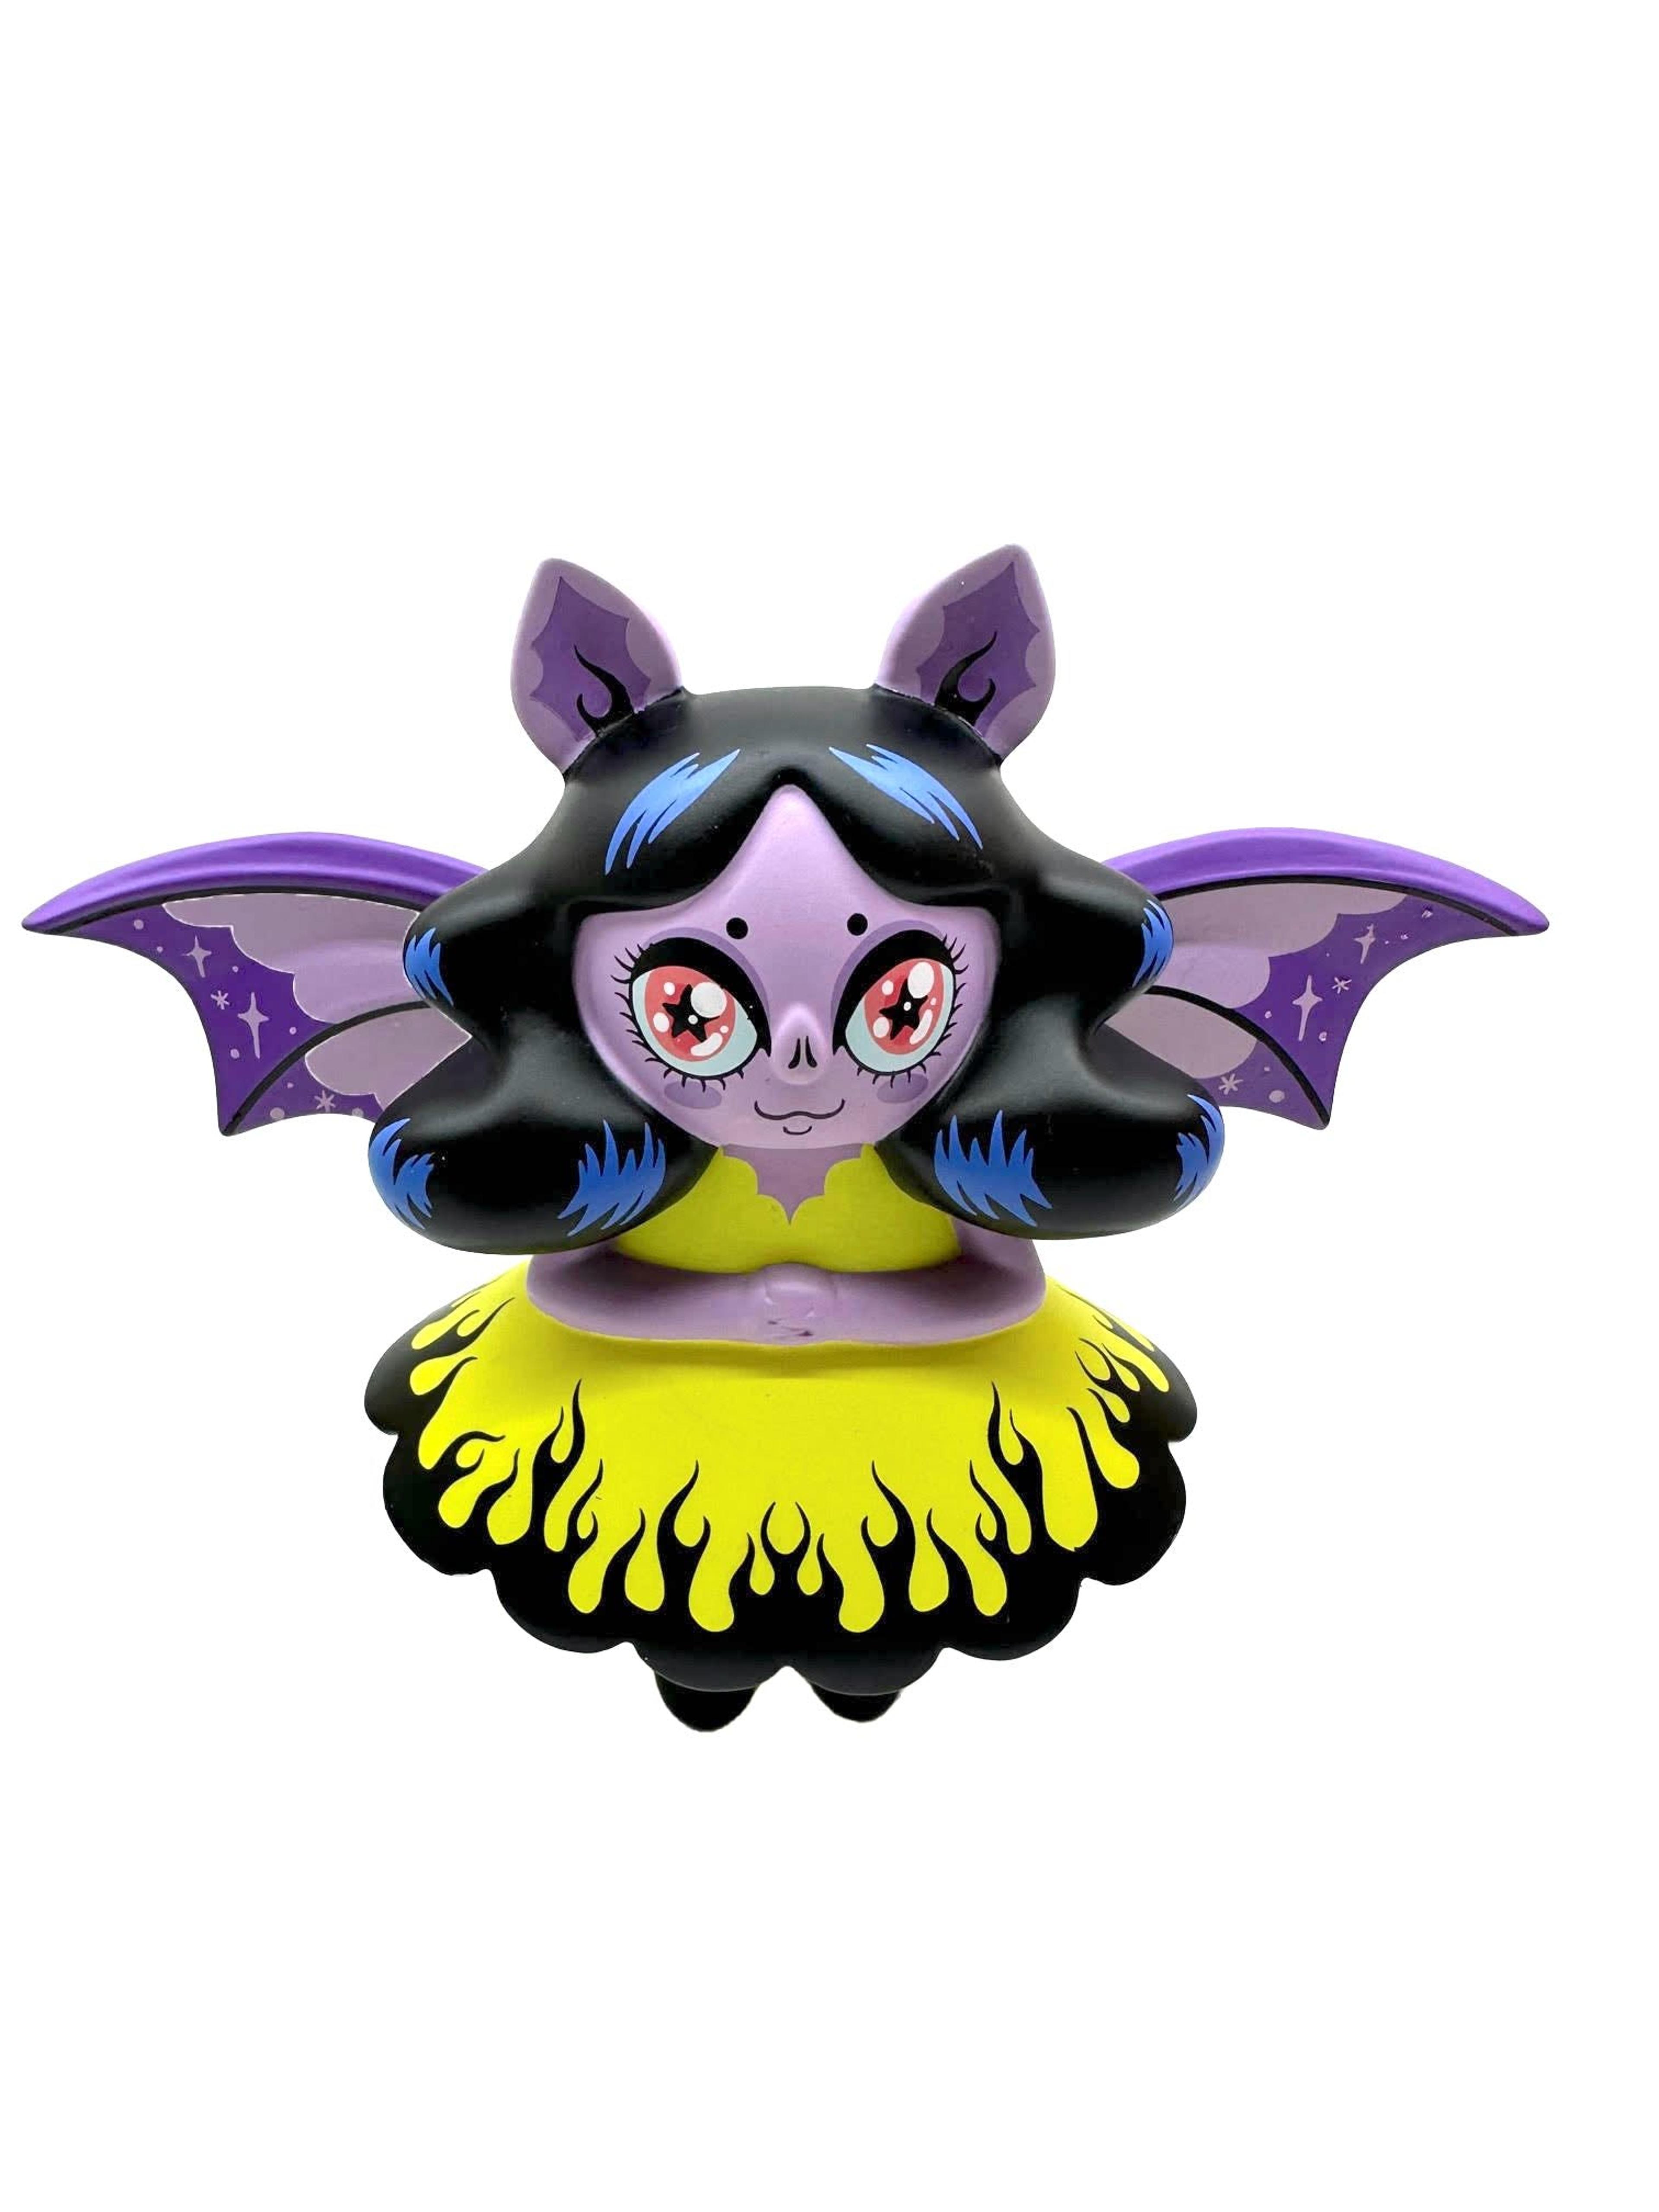 Alternate View 2 of Demon Child : Midnight Moon Bat Series 2  by  Lillipore x Nightl